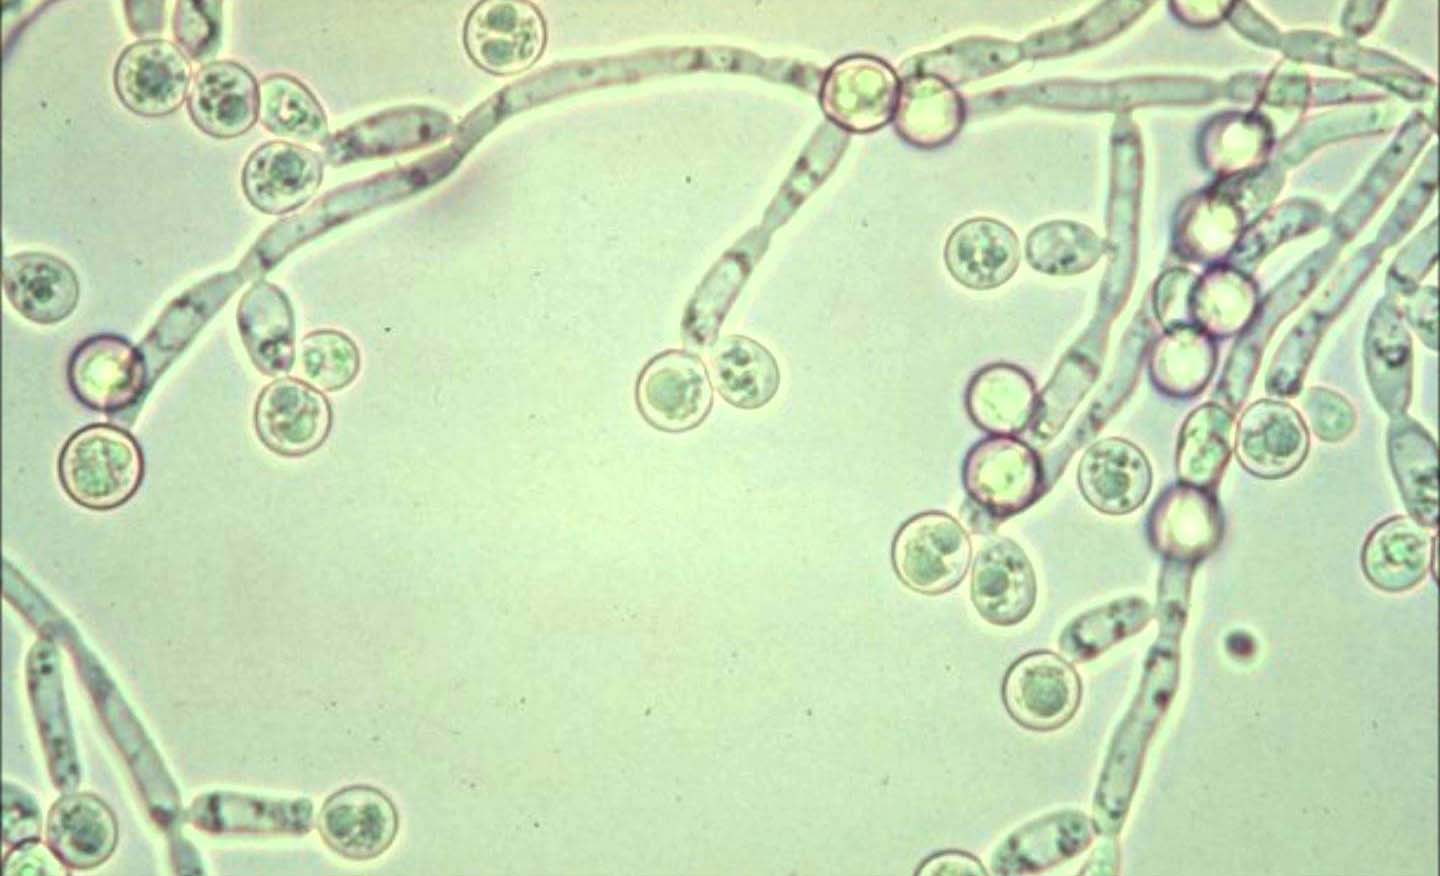 Nấm Candida albicans